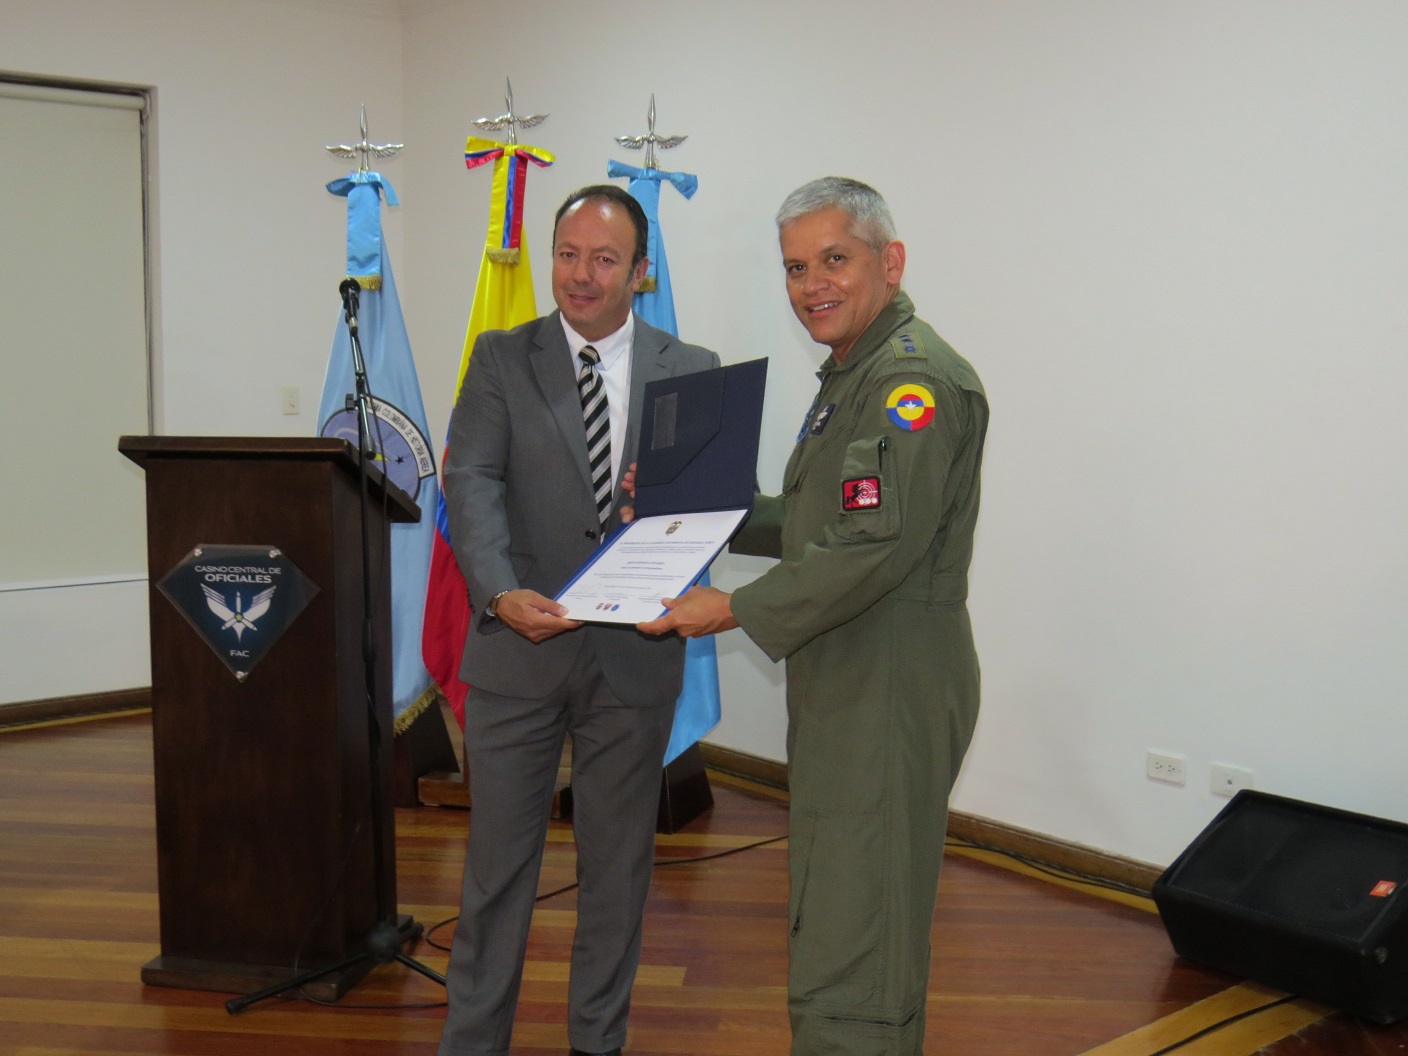 Segunda Sesión Ordinaria Academia Colombiana de Historia Aérea